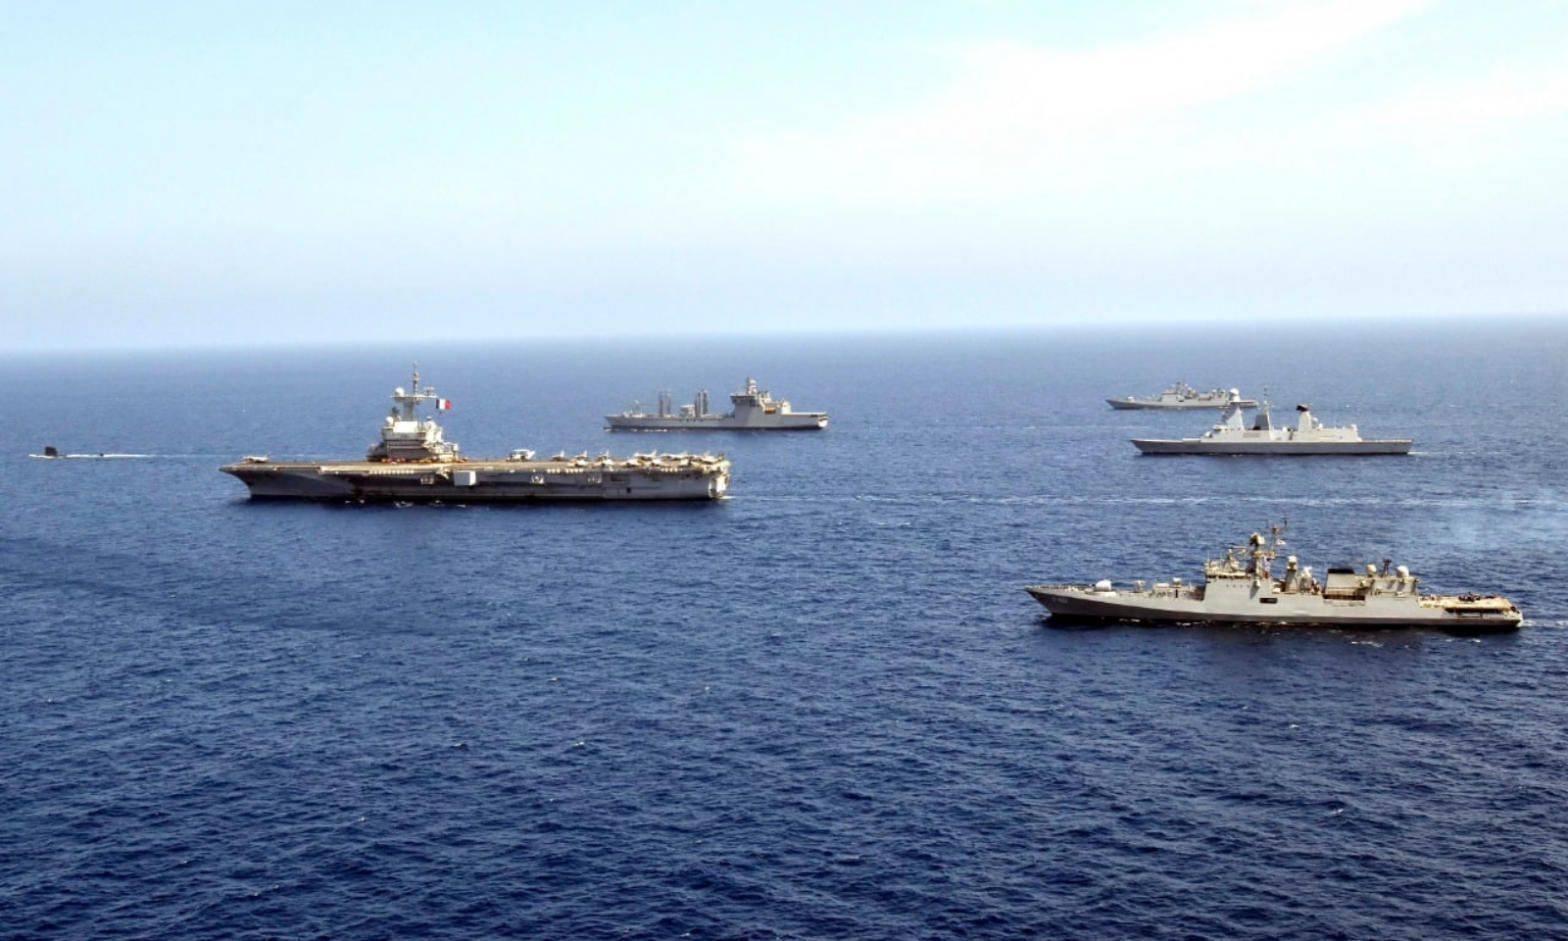 Indian and Indonesian navies conduct exercise in Arabian sea|ভারতীয় ও ইন্দোনেশিয়ান নৌবাহিনী আরব সাগরে মহড়া পরিচালনা করেছে_2.1